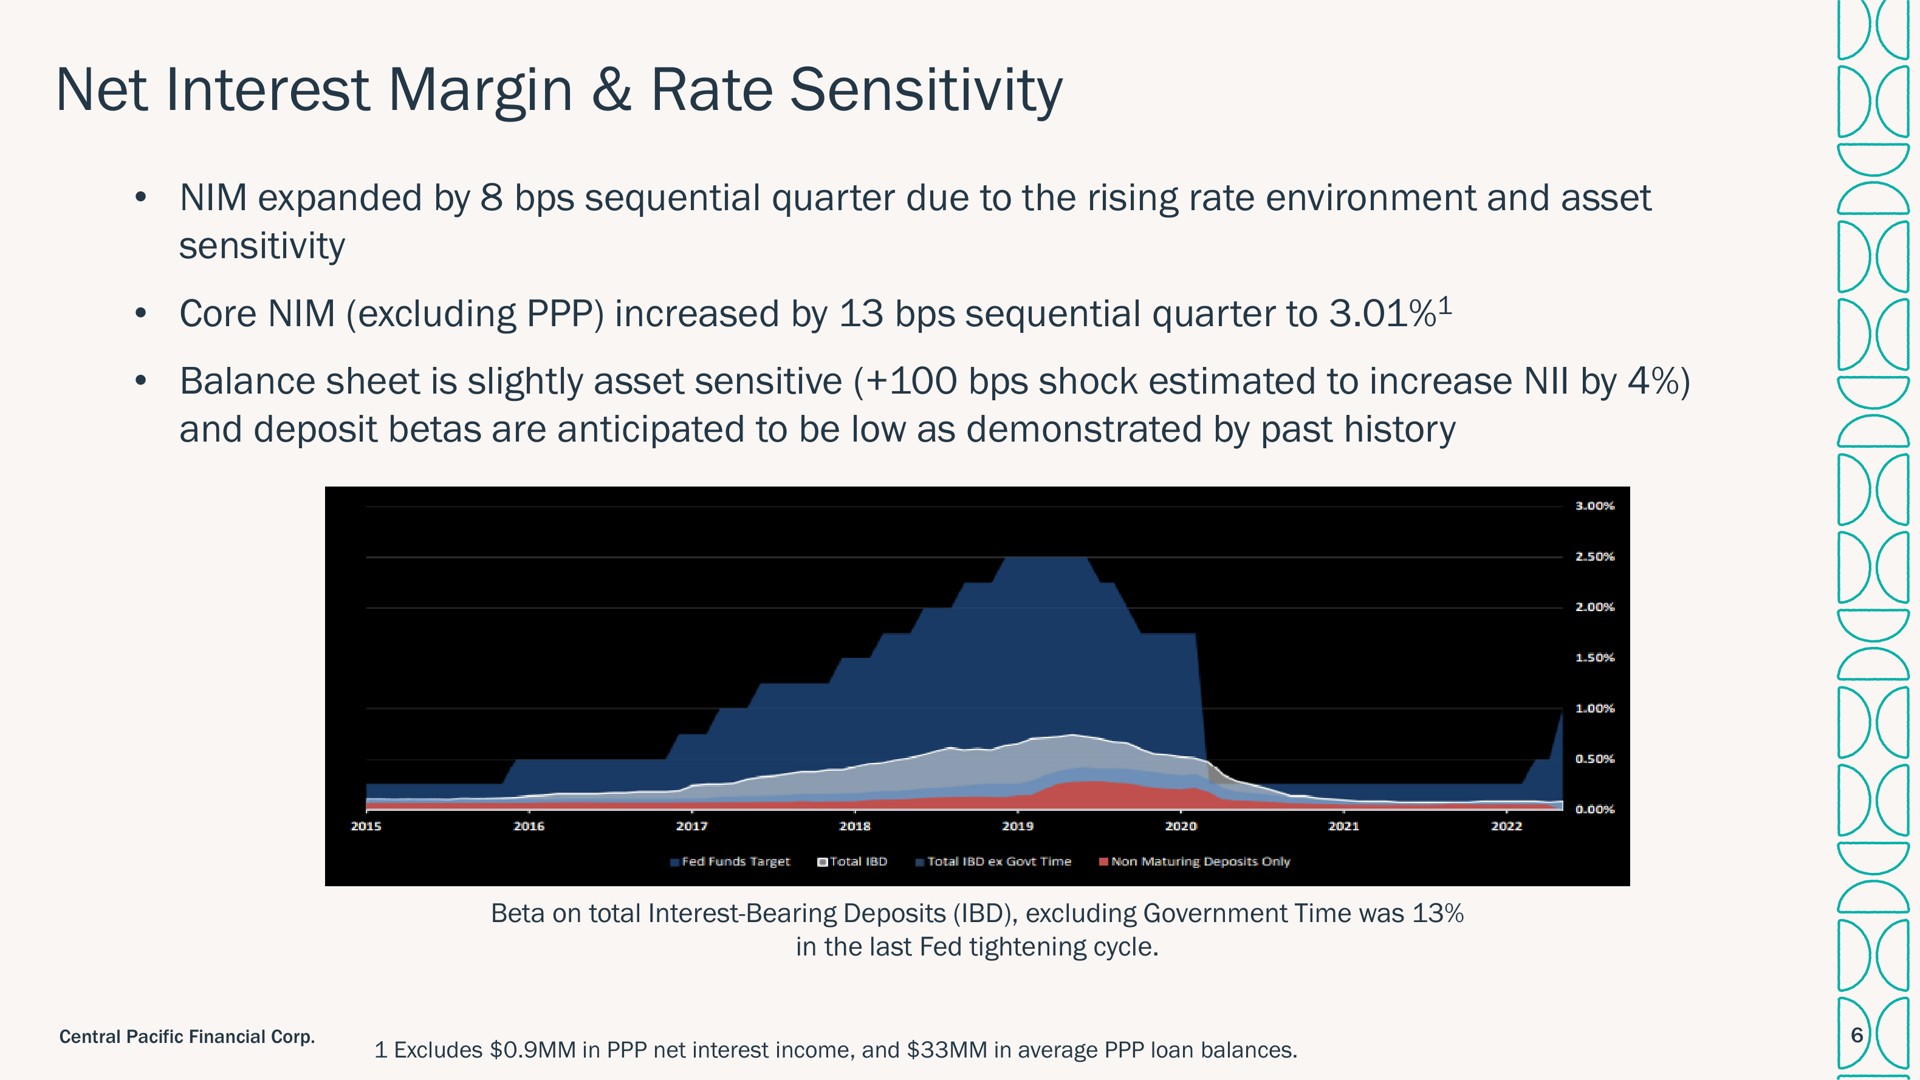 net interest margin rate sensitivity | Central Pacific Financial